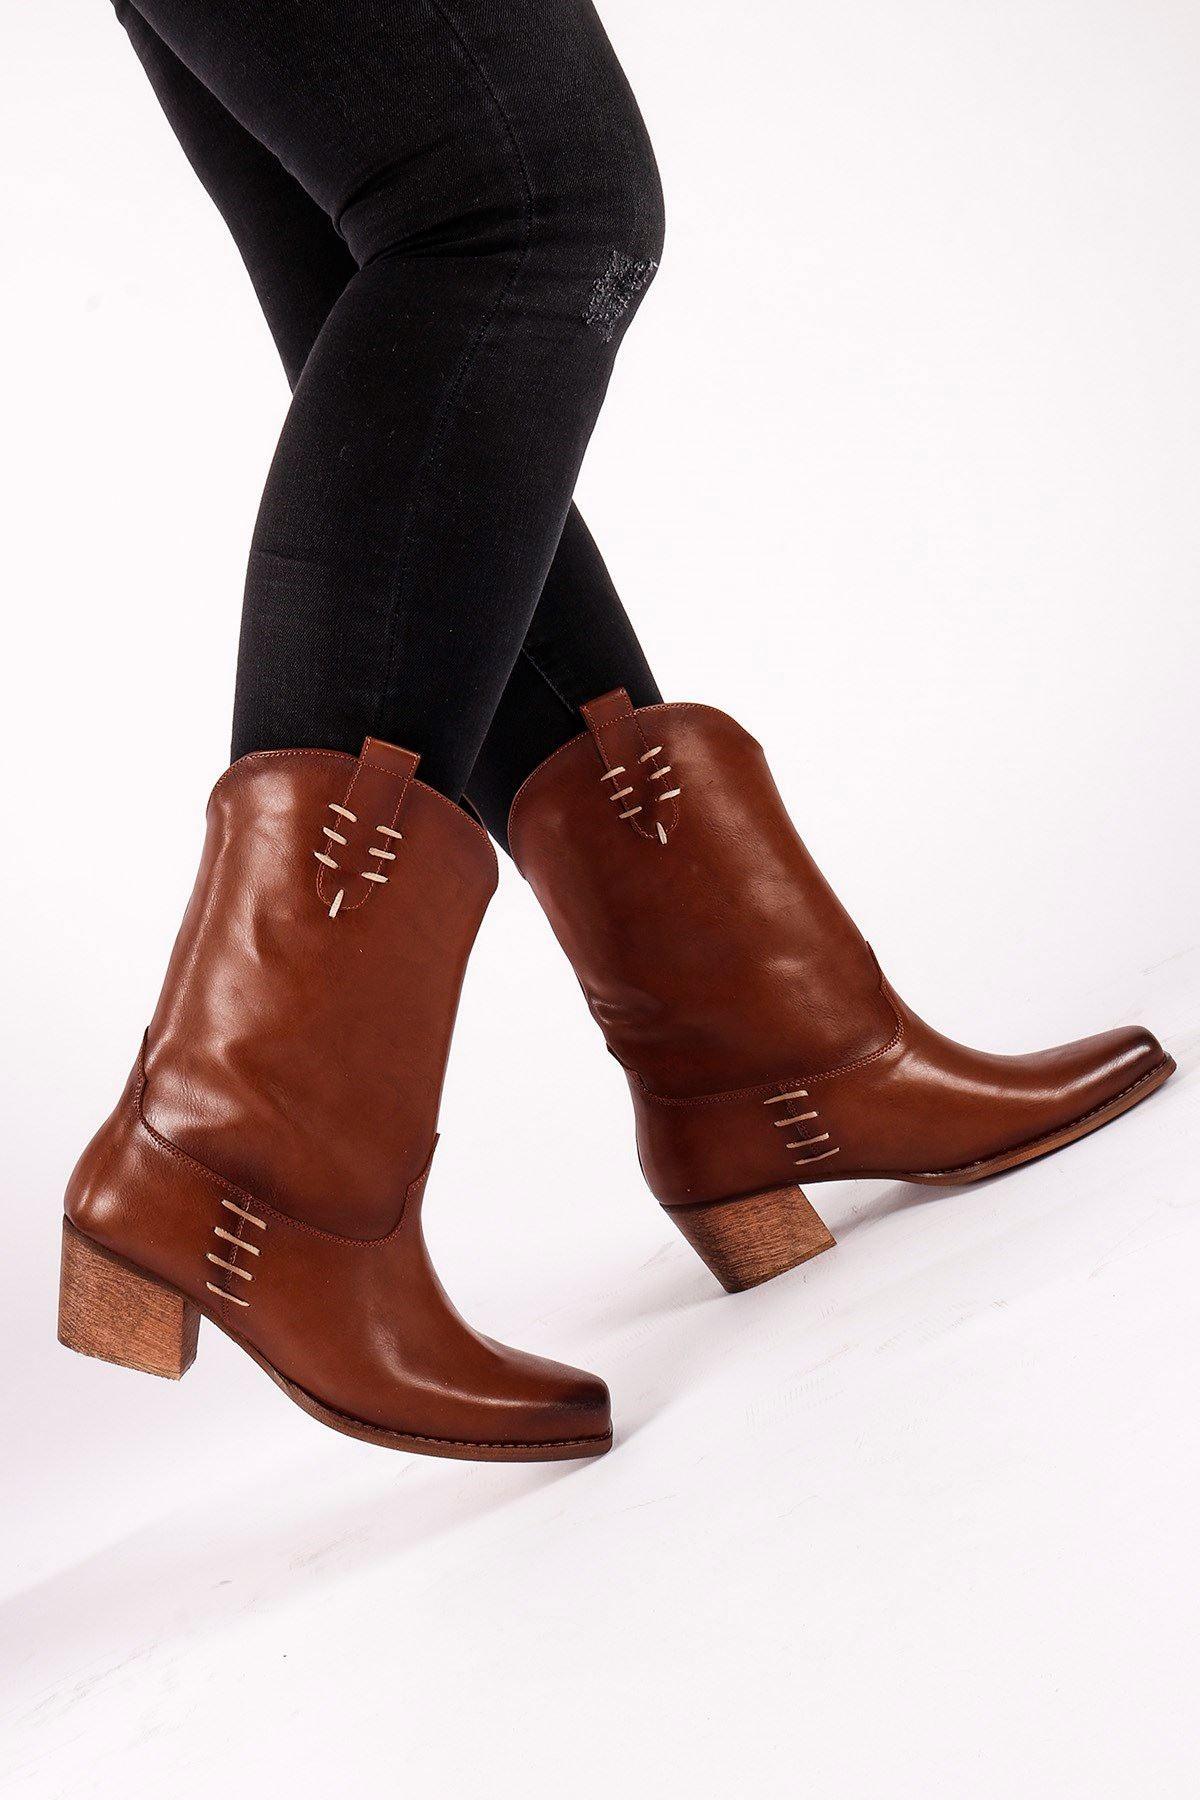 Agatha Women's Tan Skin Boots - STREET MODE ™